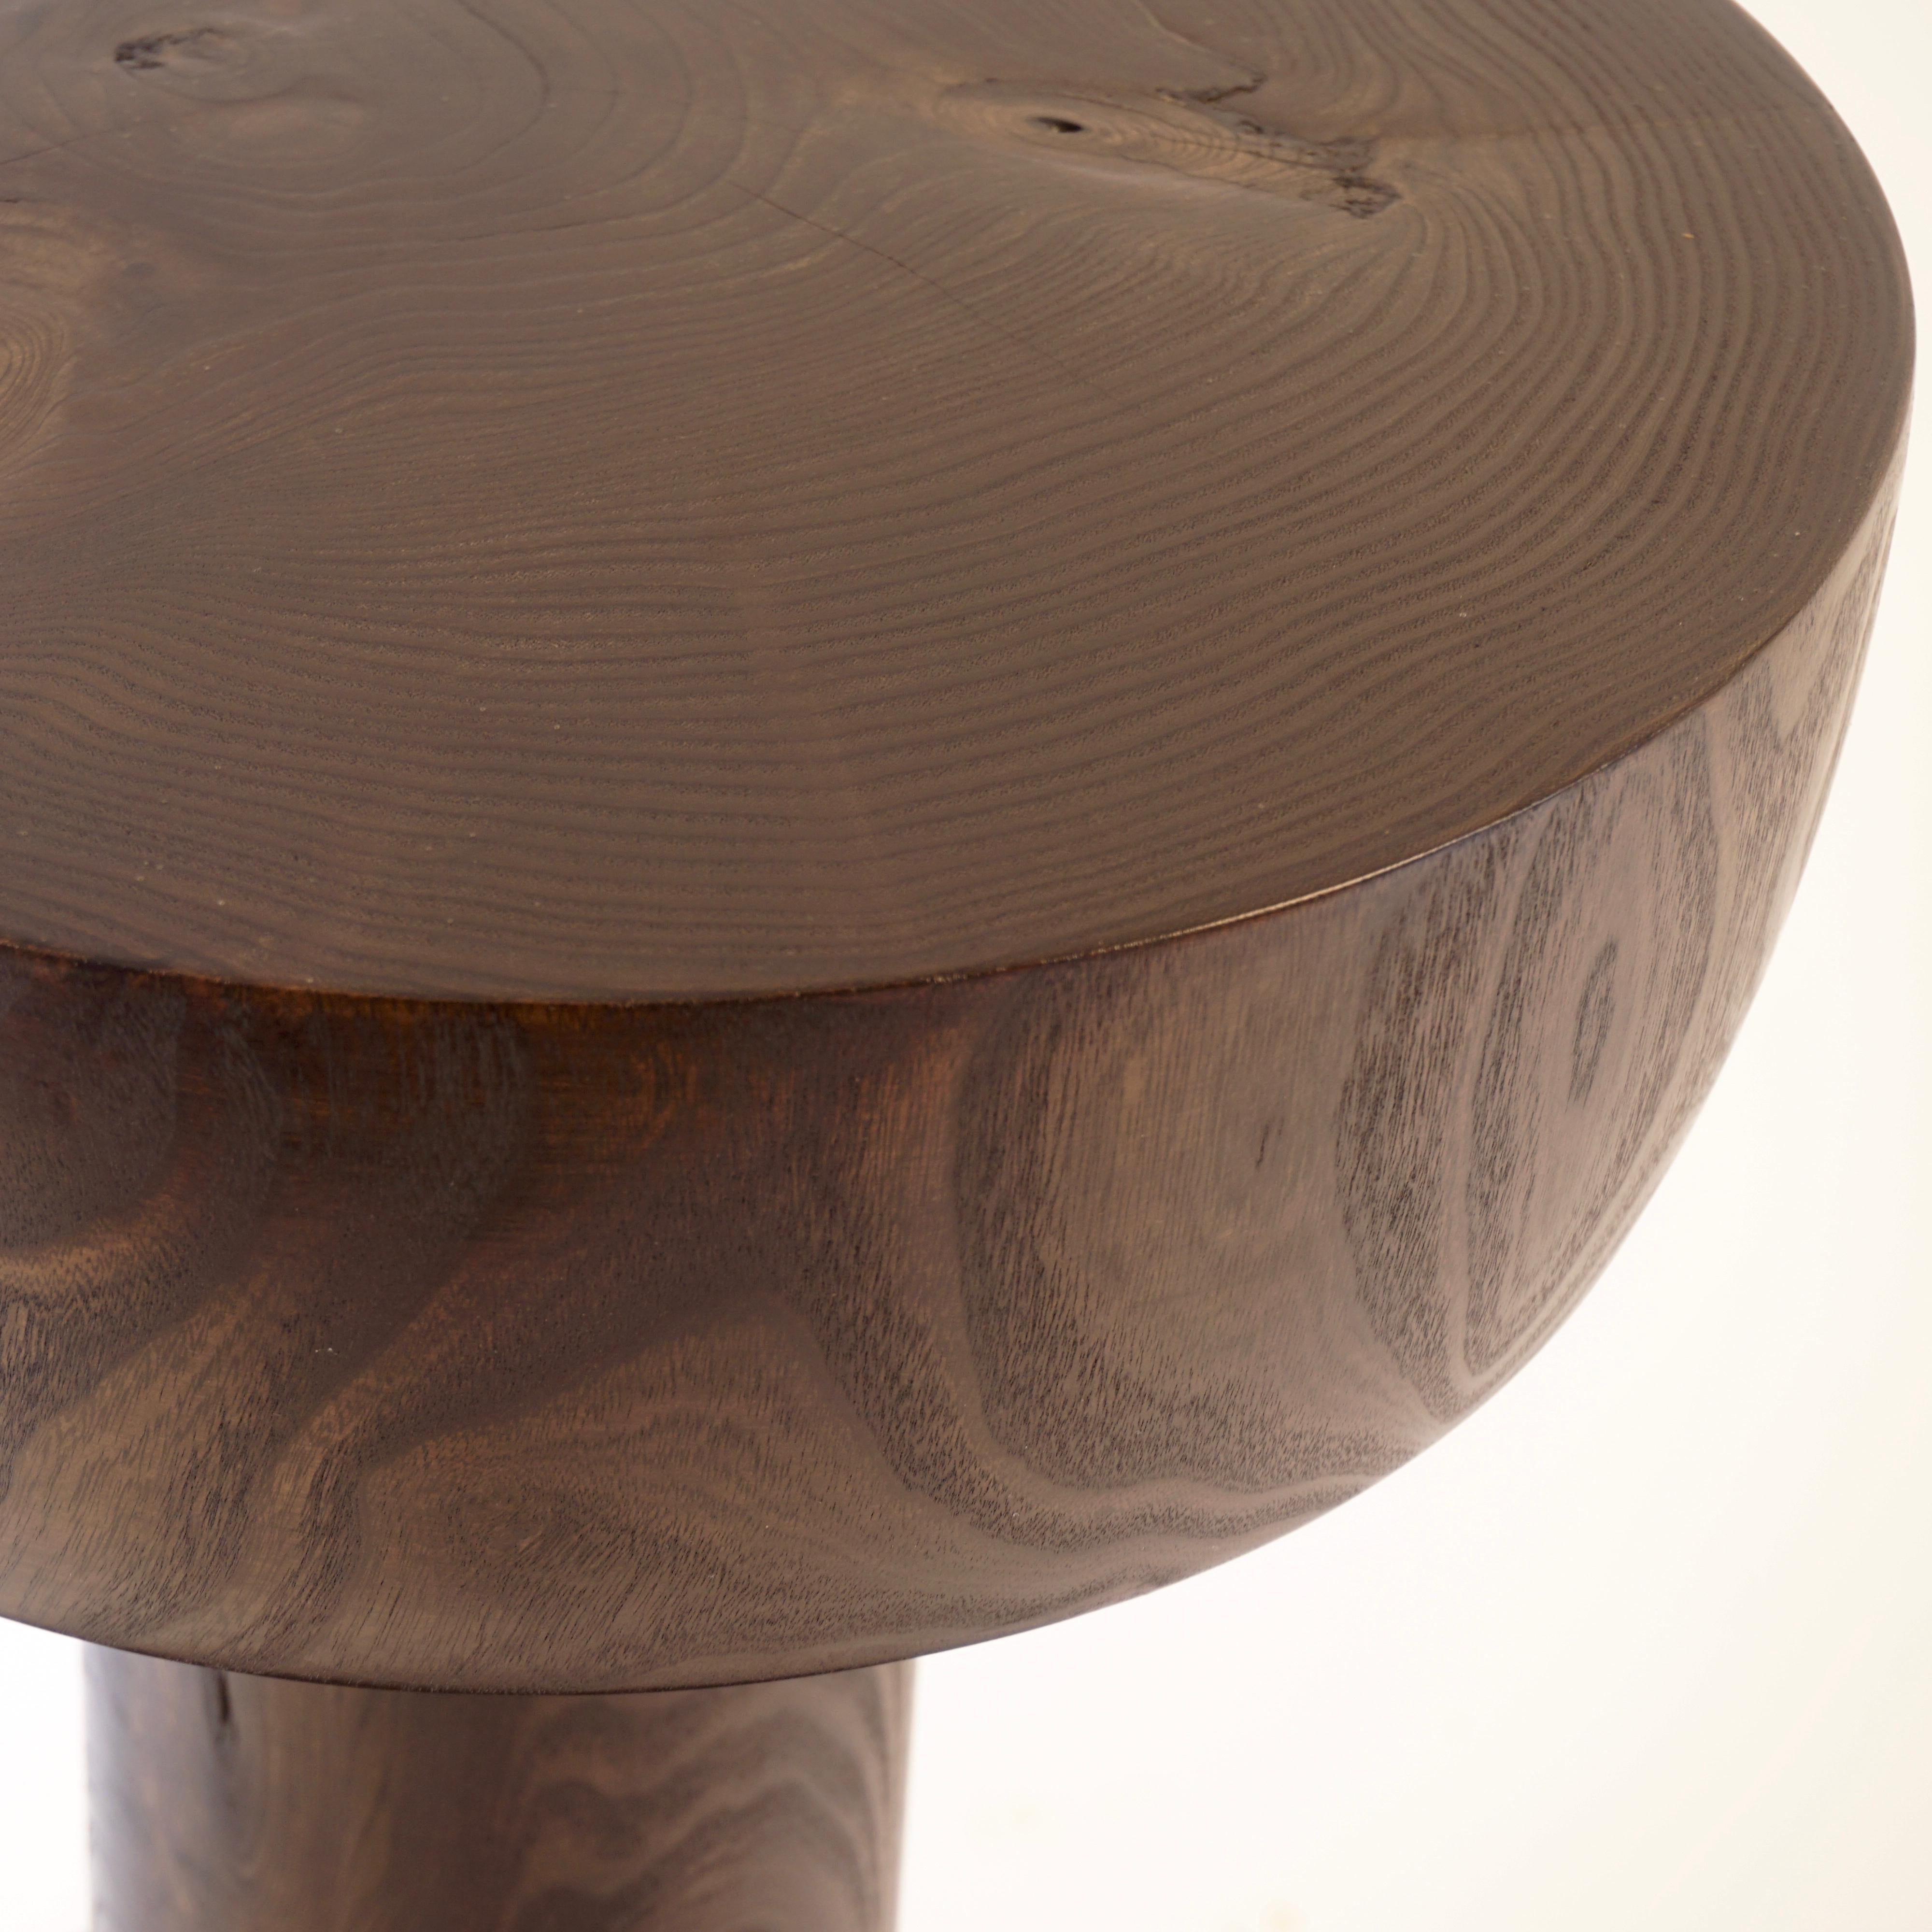 American Turned Wooden Pedestal #14 in Ebonised Catalpa